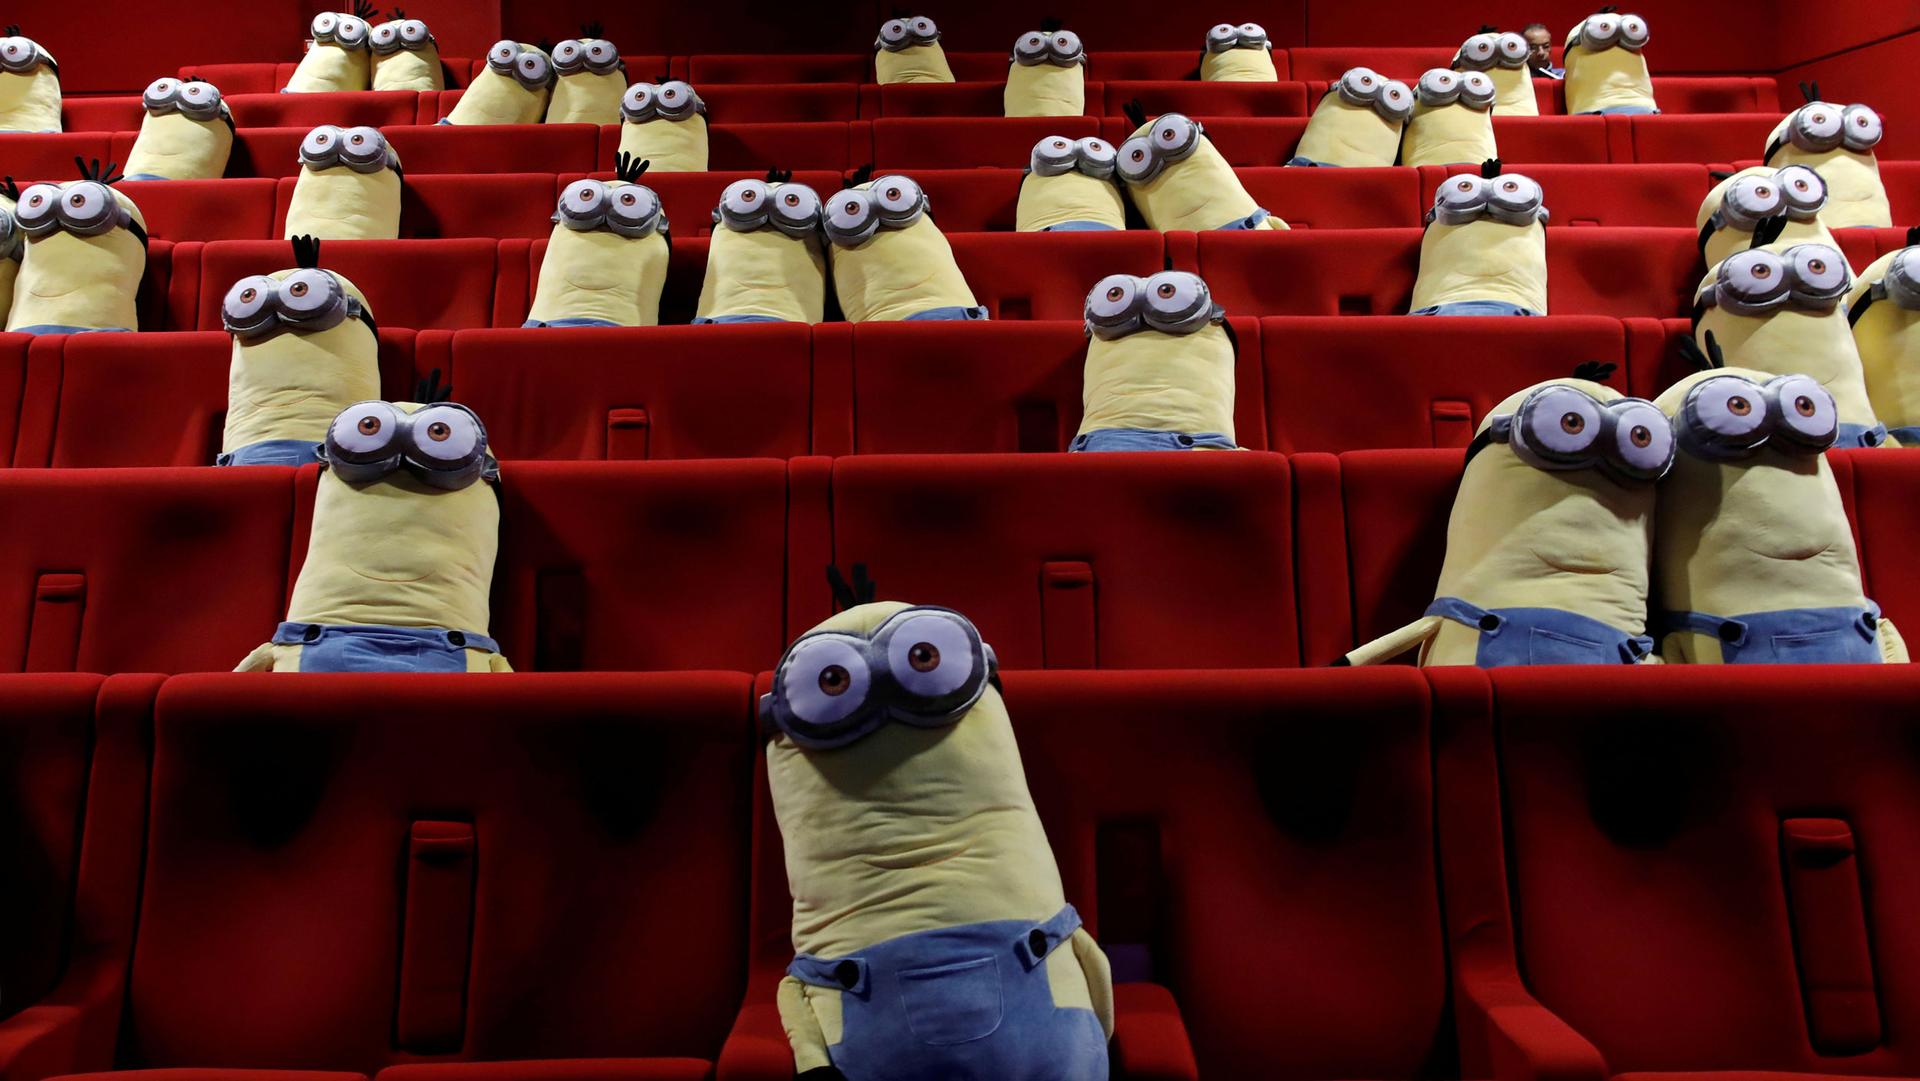 Stuffed Minion dolls are seen in theater seats